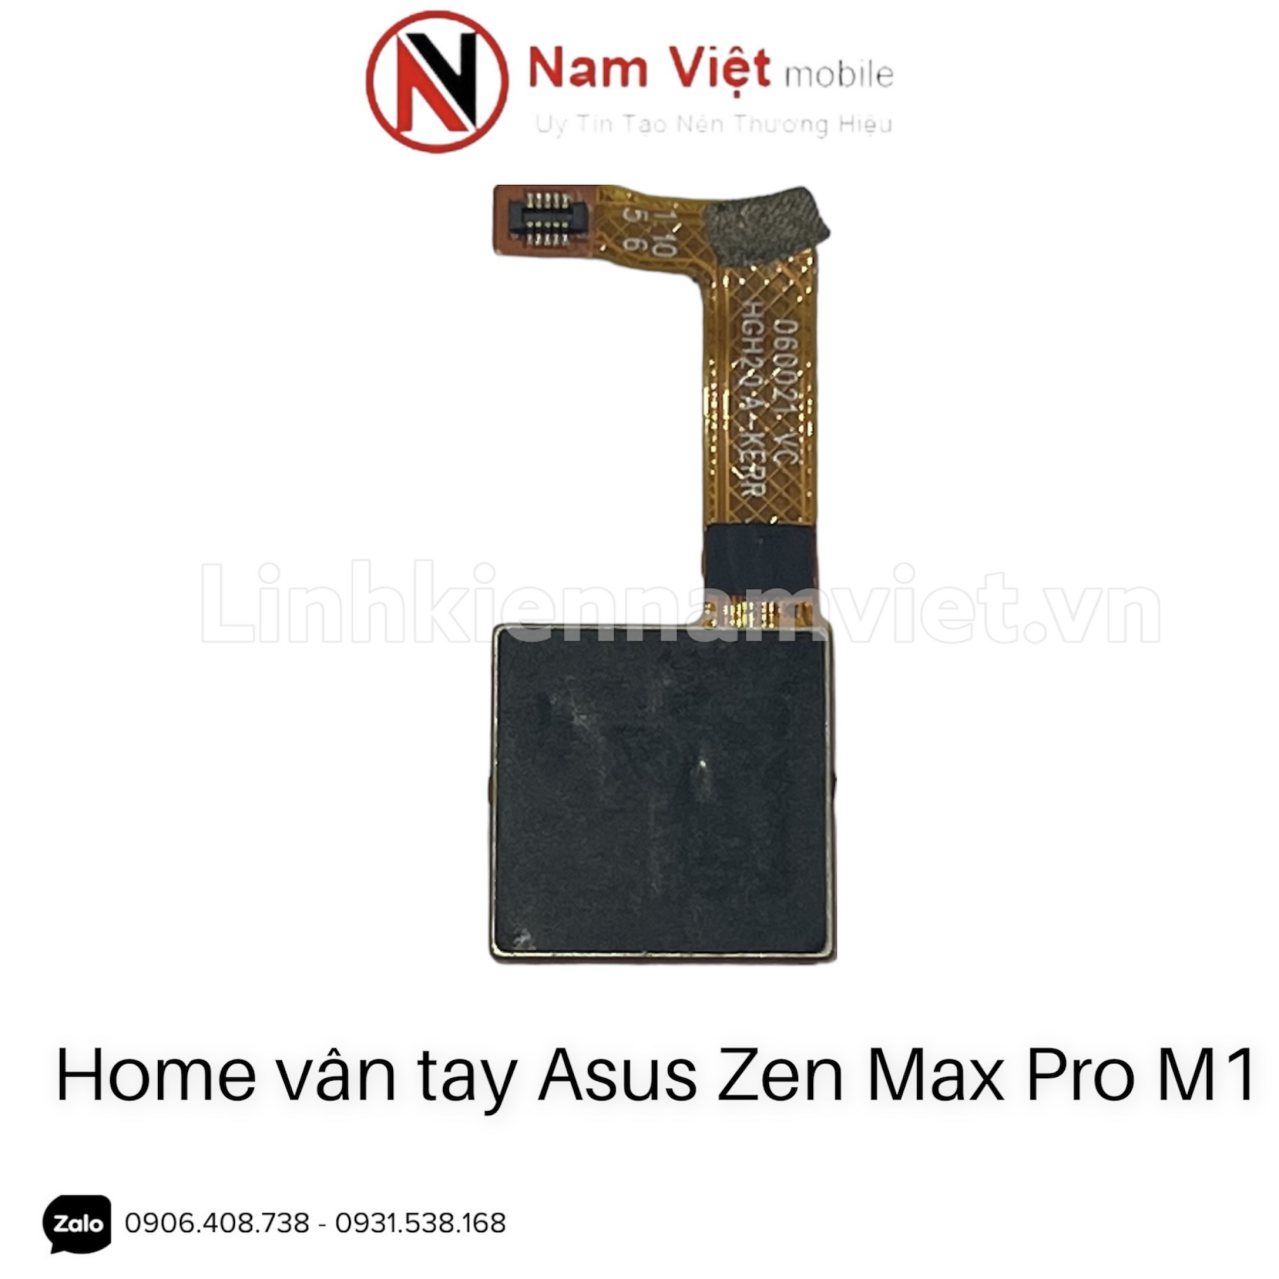 Home vân tay Asus Zen Max Pro M1